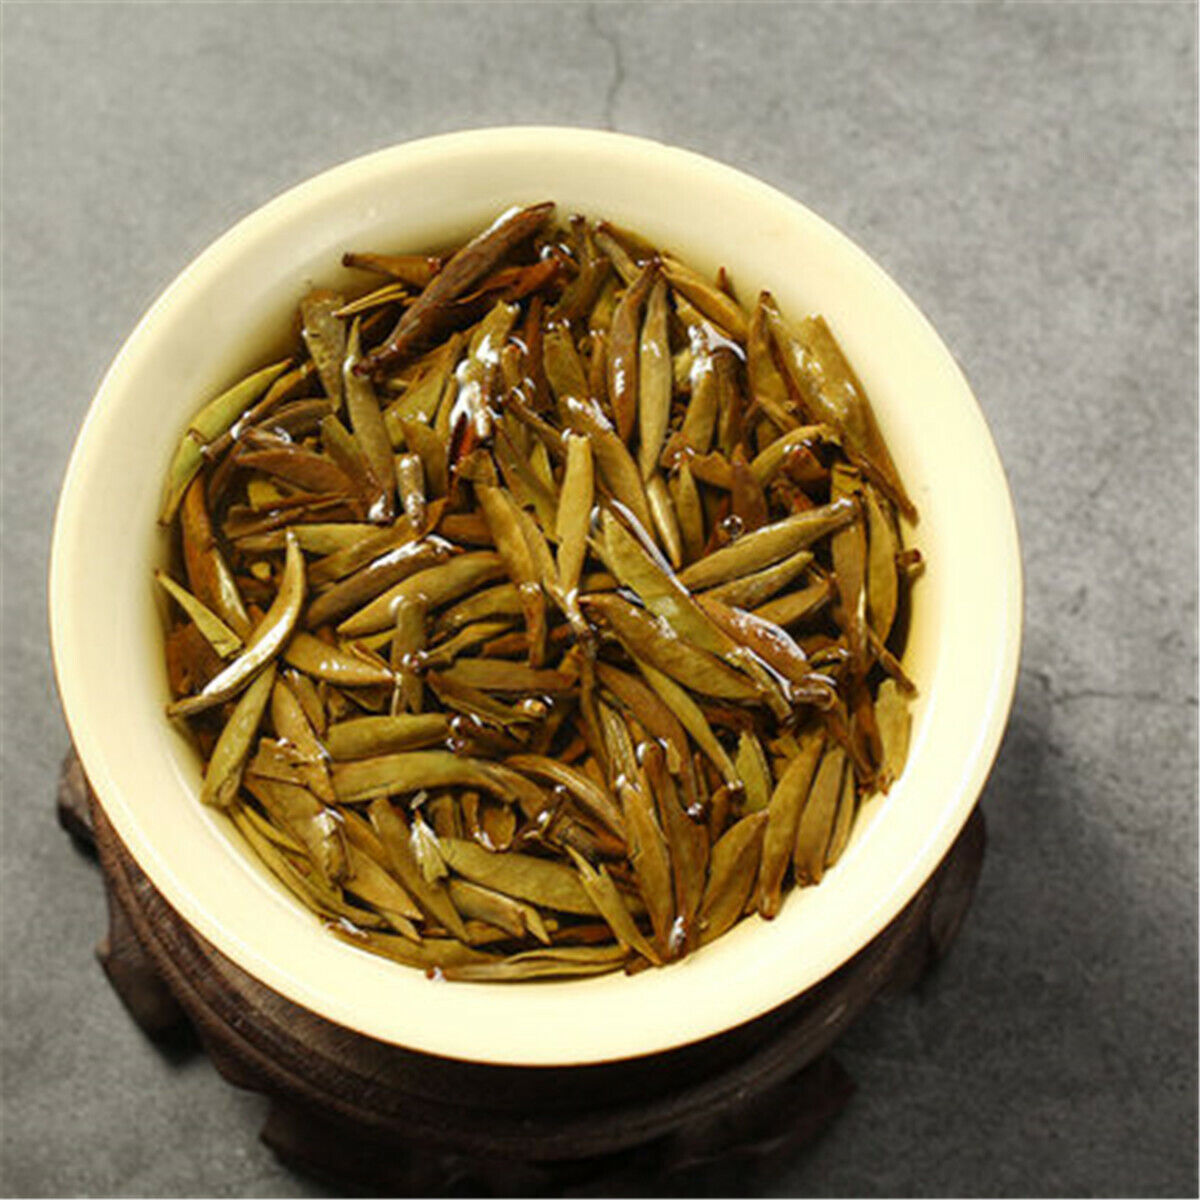 elizabeth arden Tea Silver Needle White Tea Organic Loose Leaf Bai Hao Yin Zhen